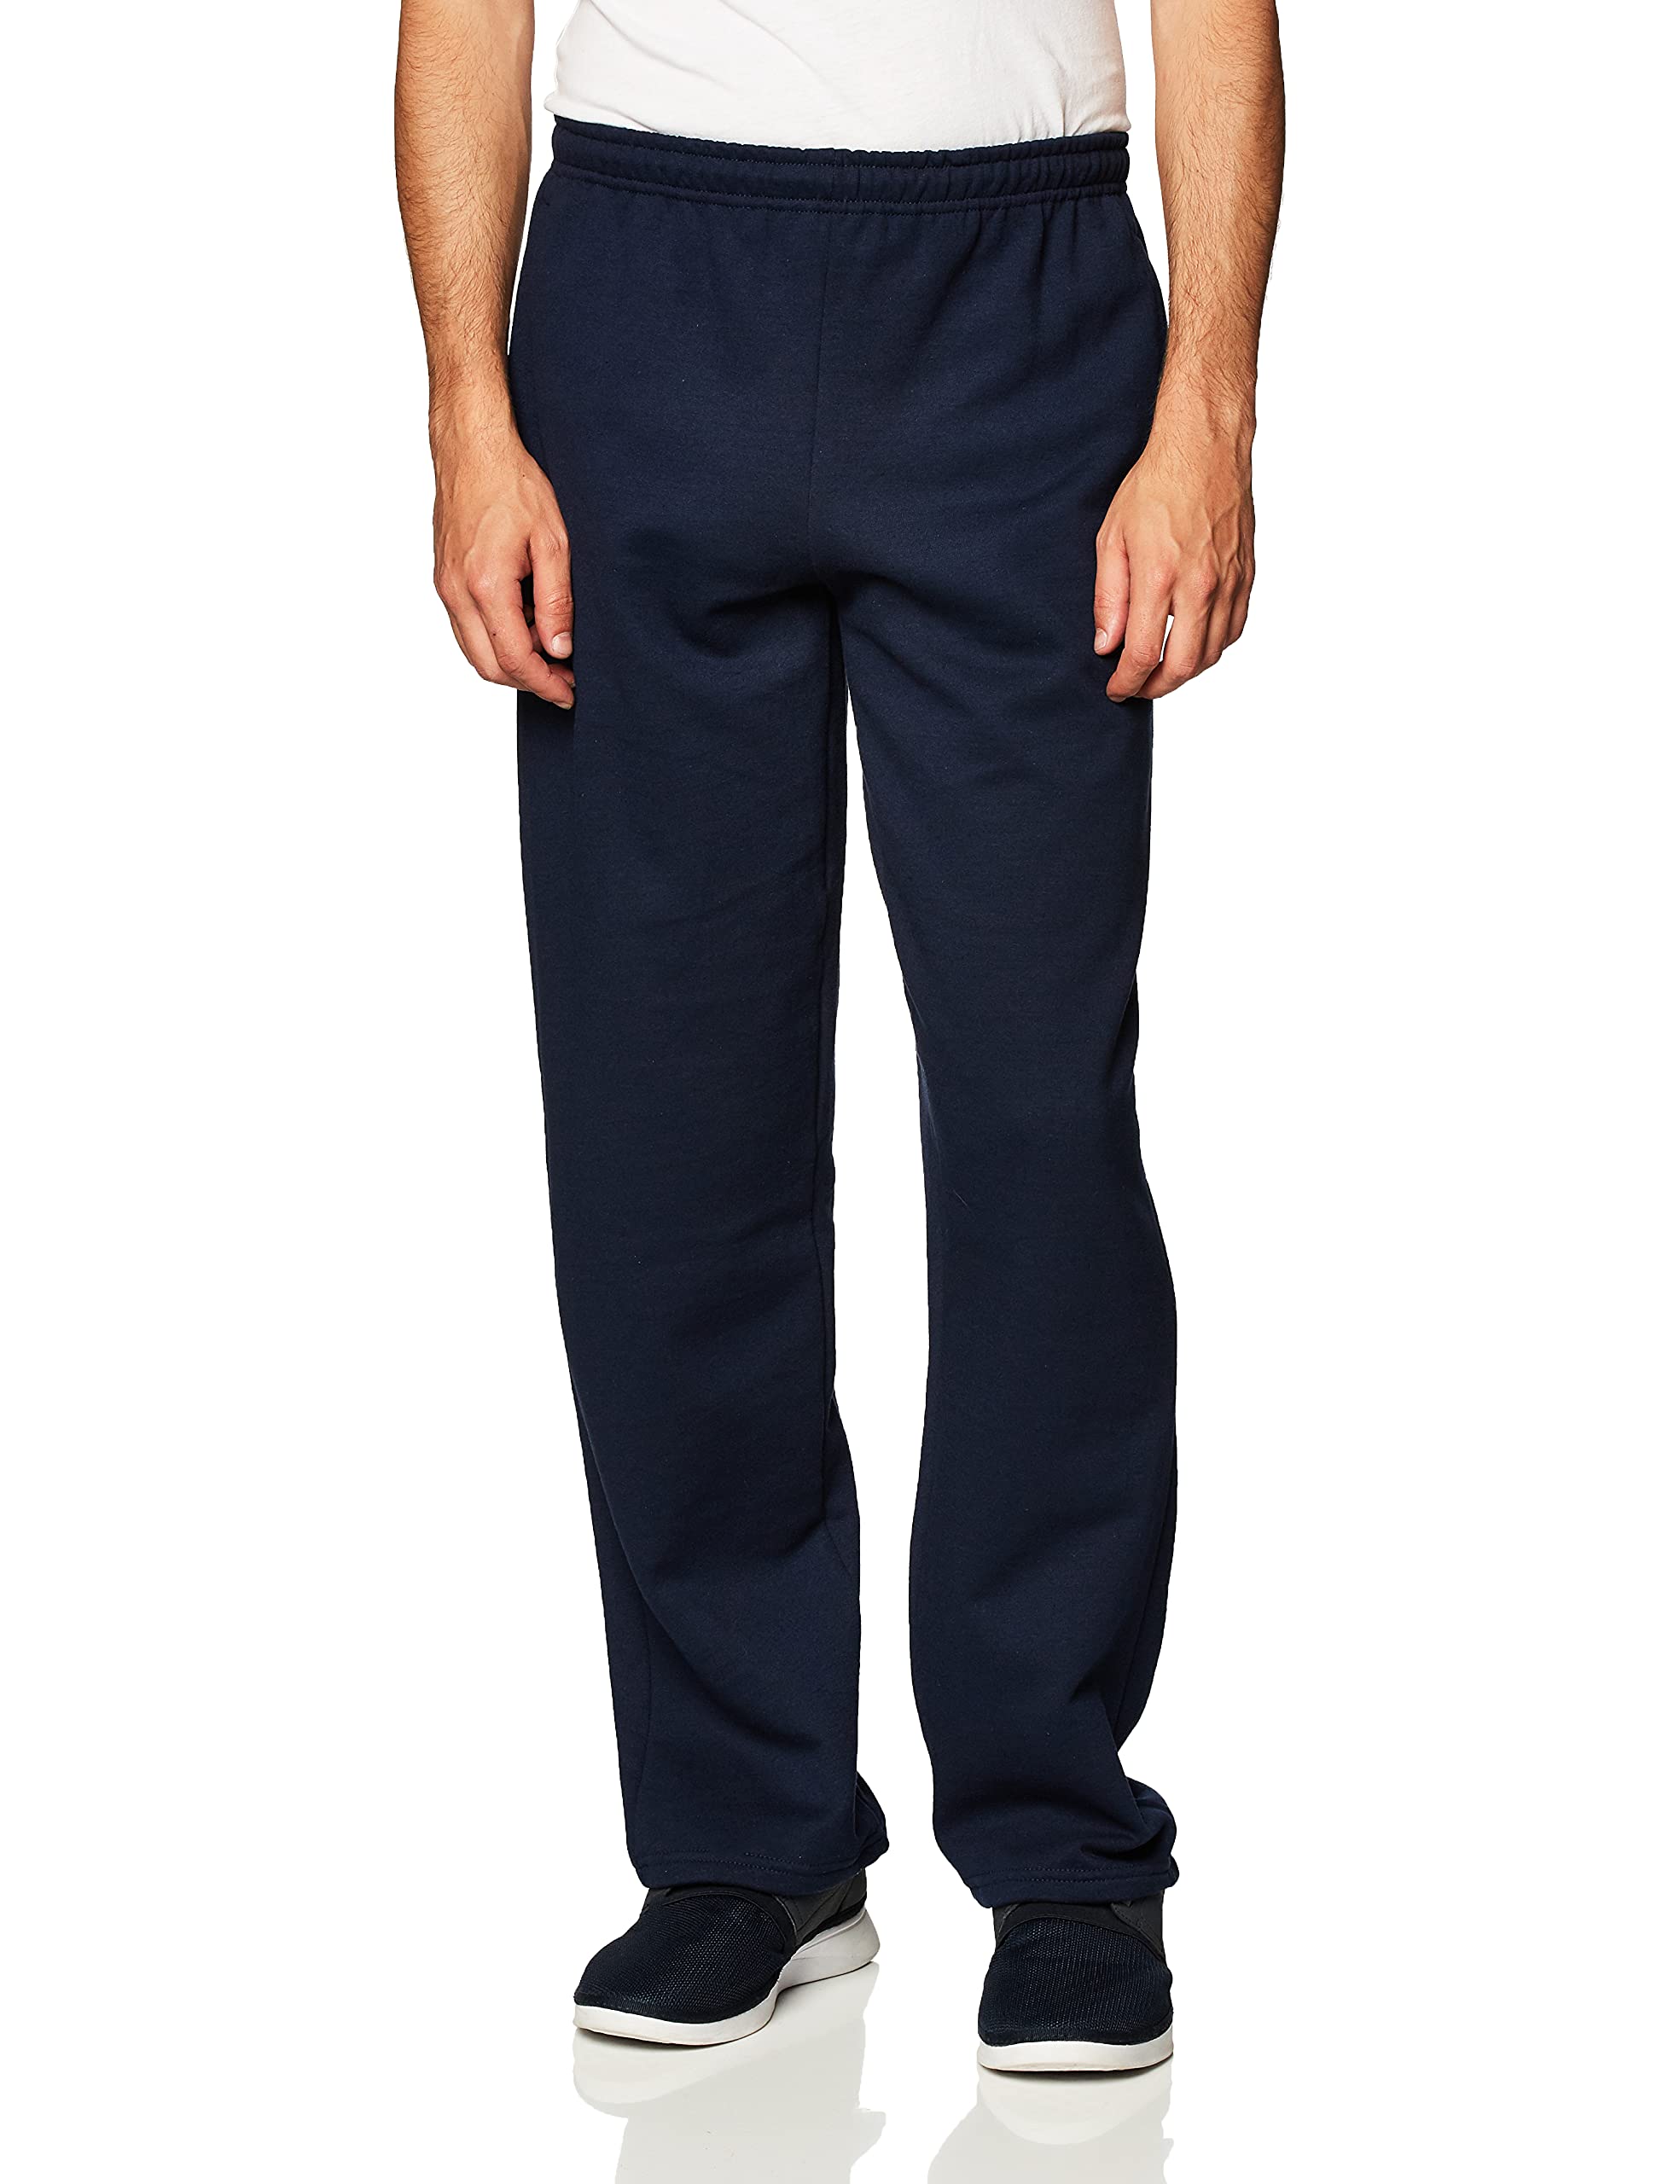 Gildan Adult Fleece Open Bottom Sweatpants with Pockets, Style G18300, Navy, Medium